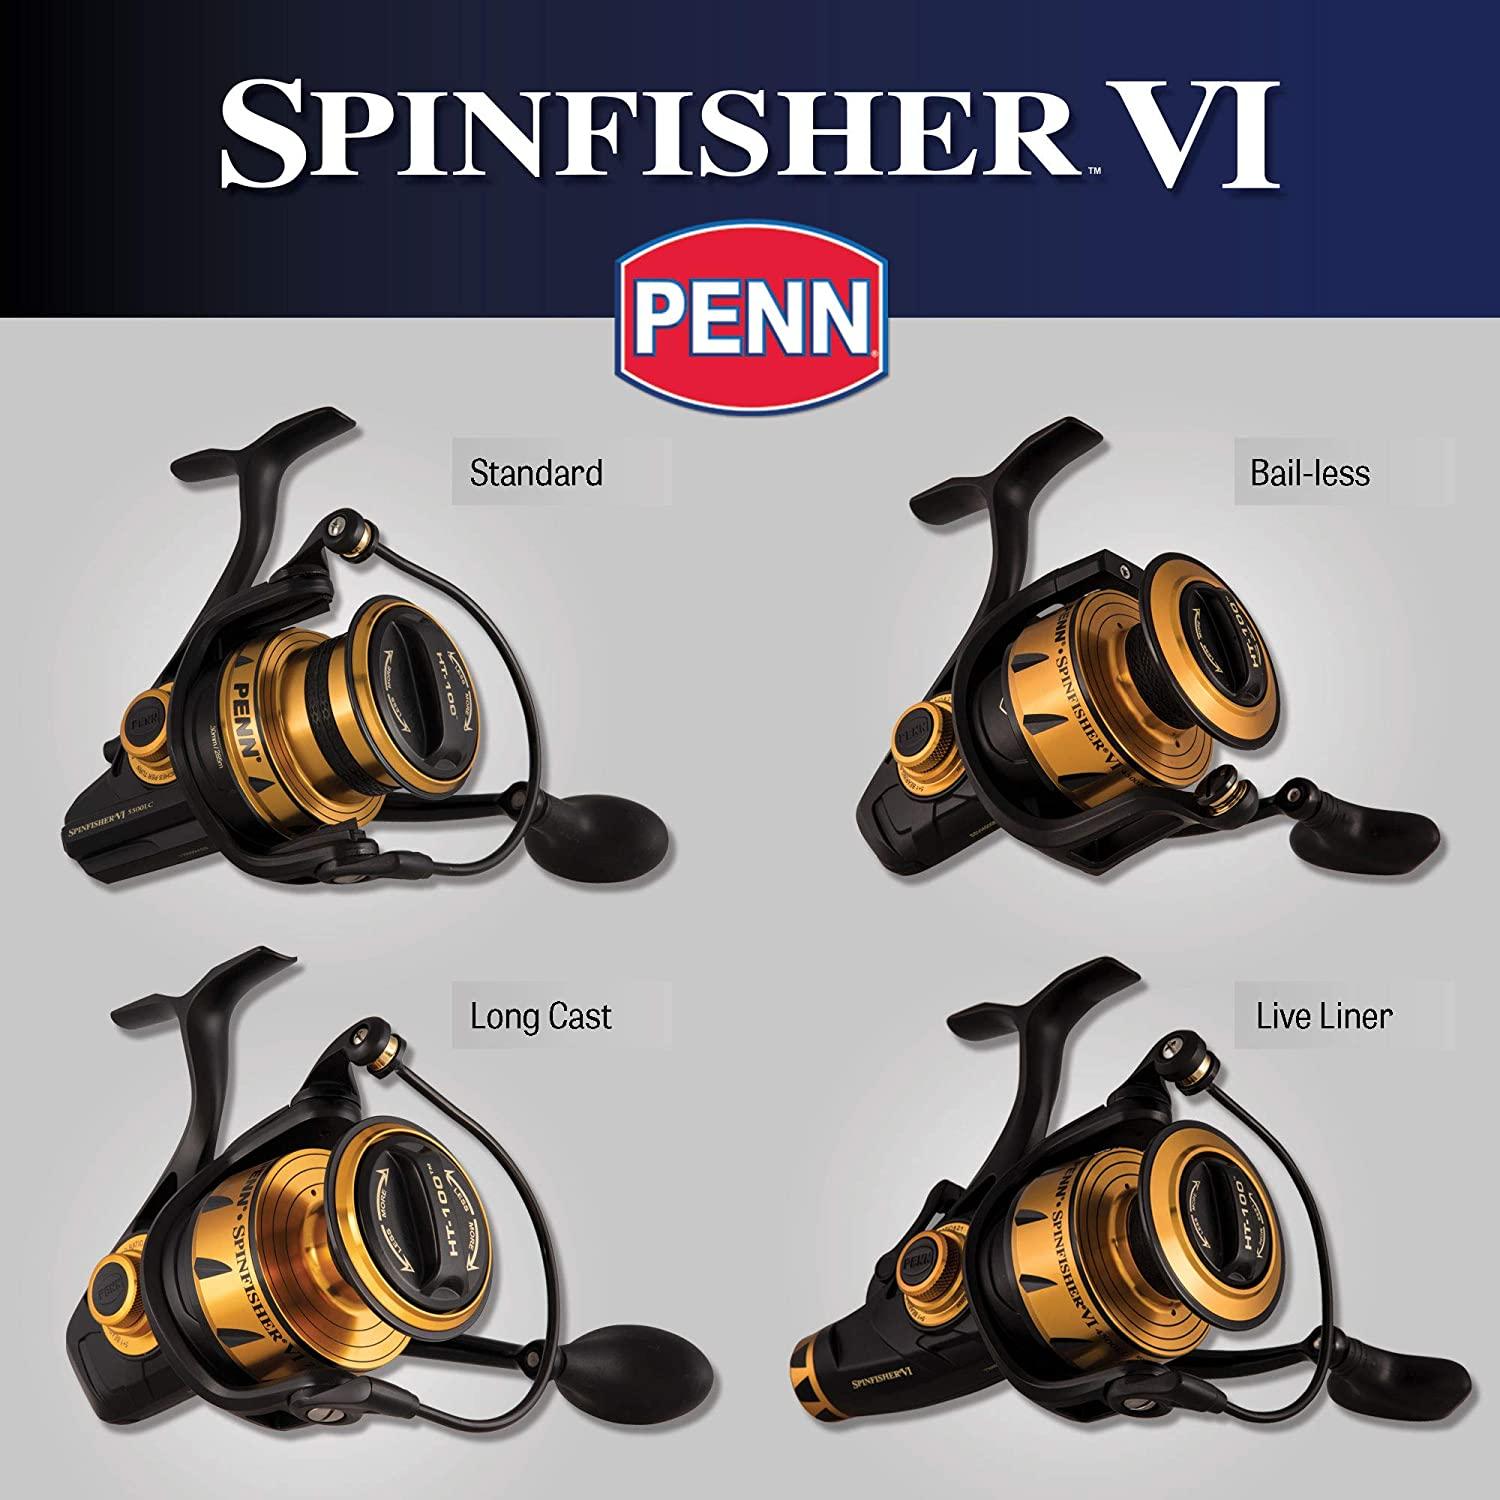 Penn Spinfisher VI Spinning Fishing Reel 4500 Spinfisher Vi